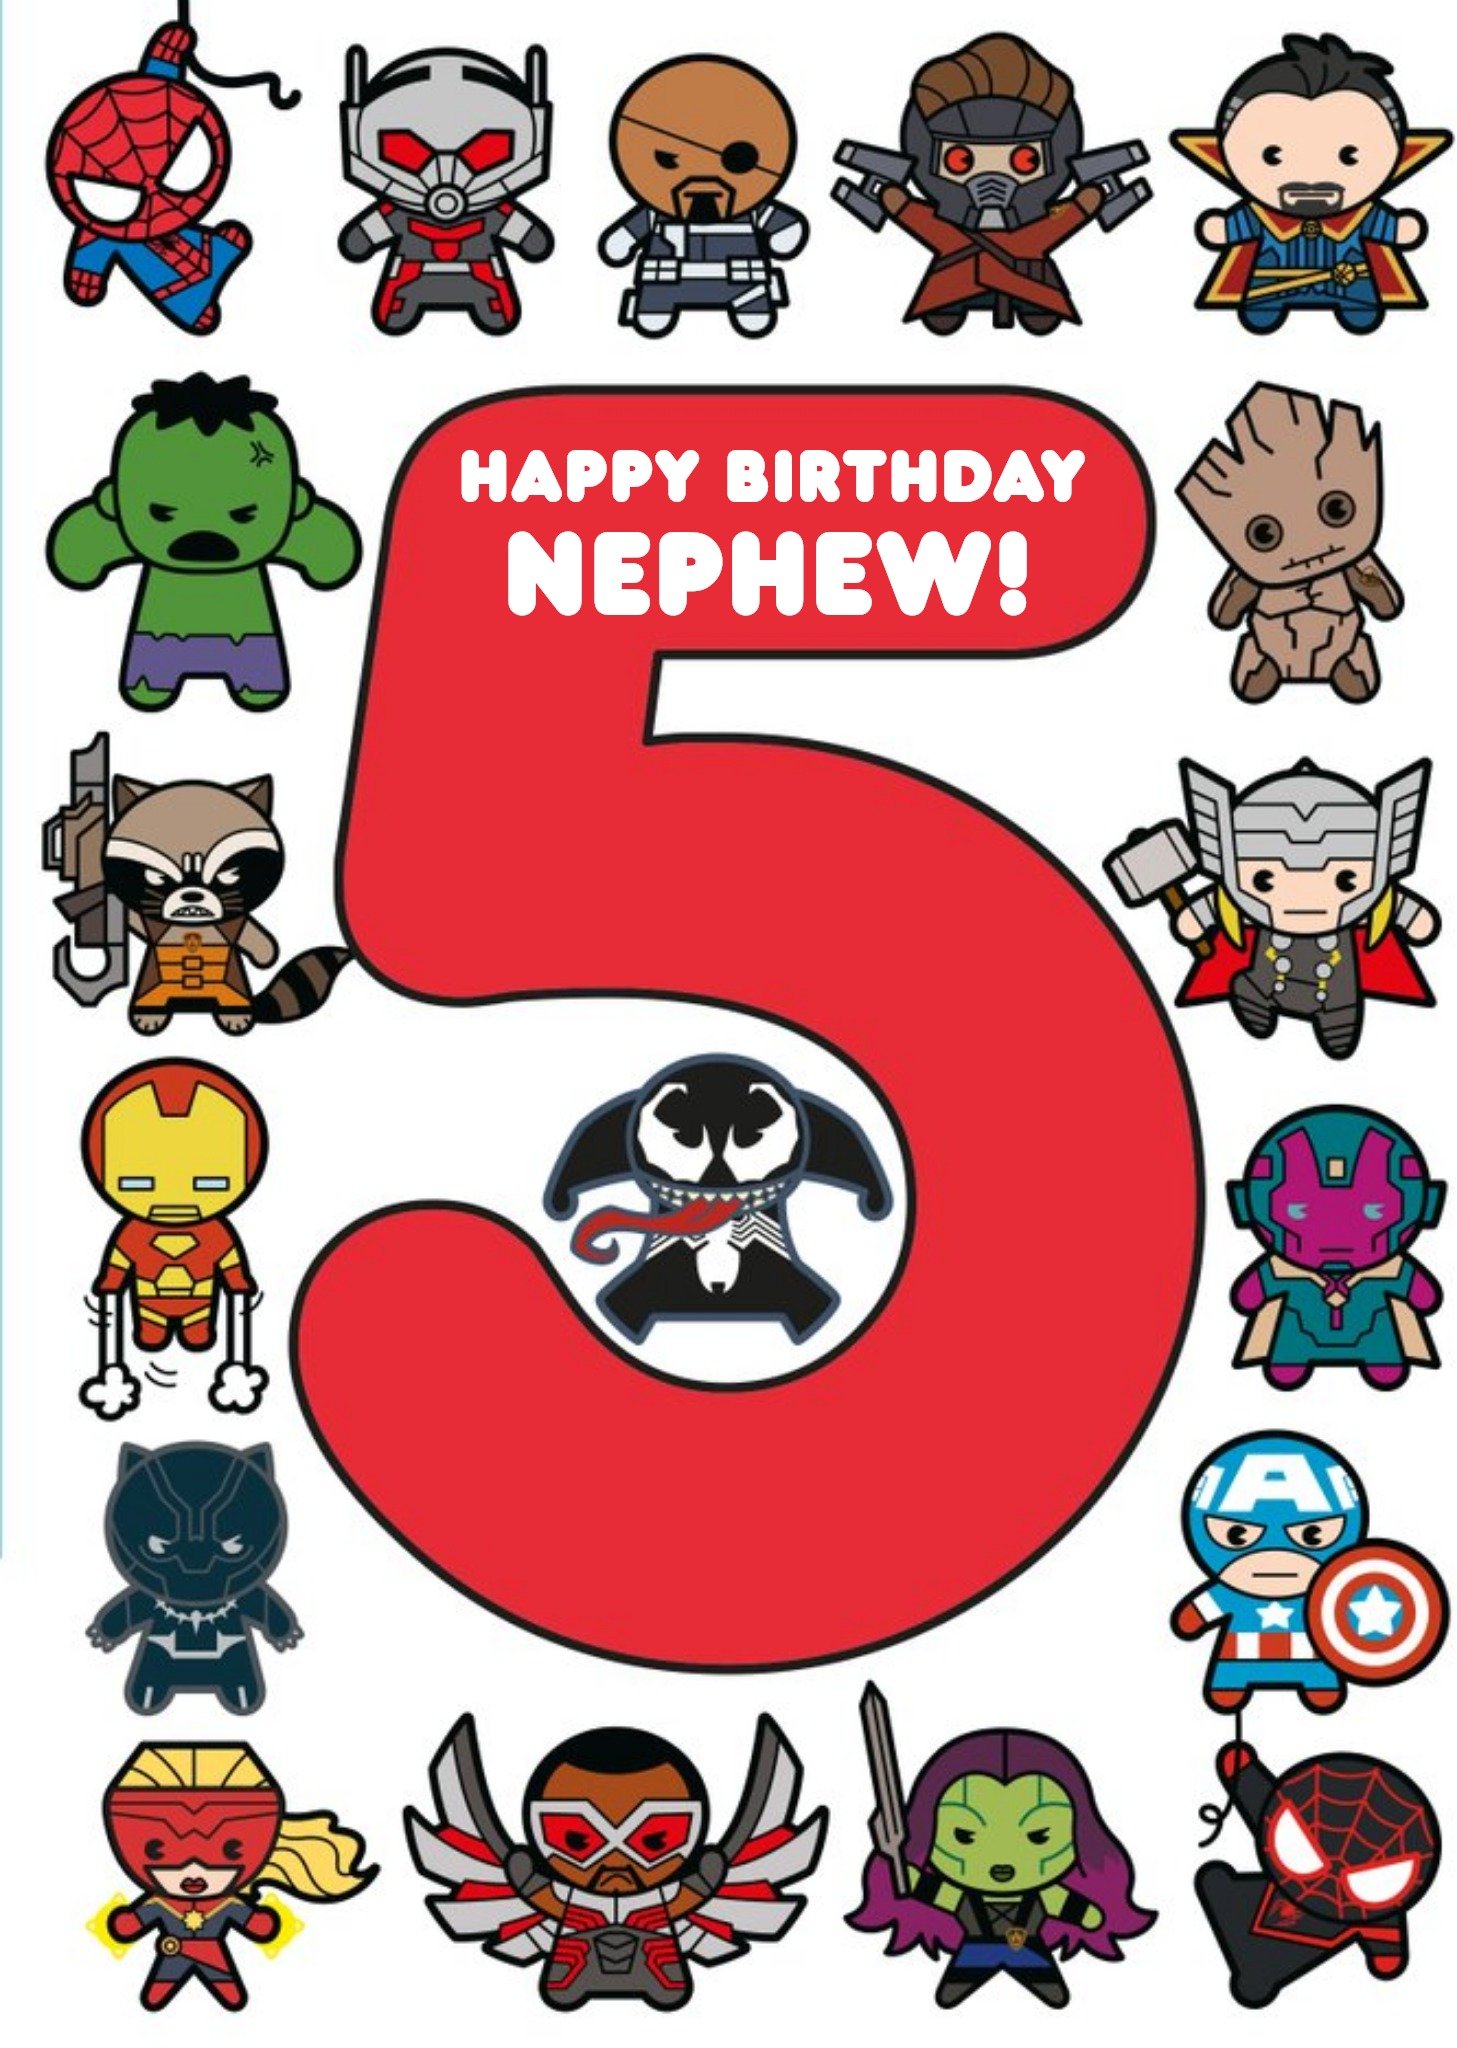 the Avengers Marvel Comics Cartoon Characters Nephew 5th Birthday Card Ecard